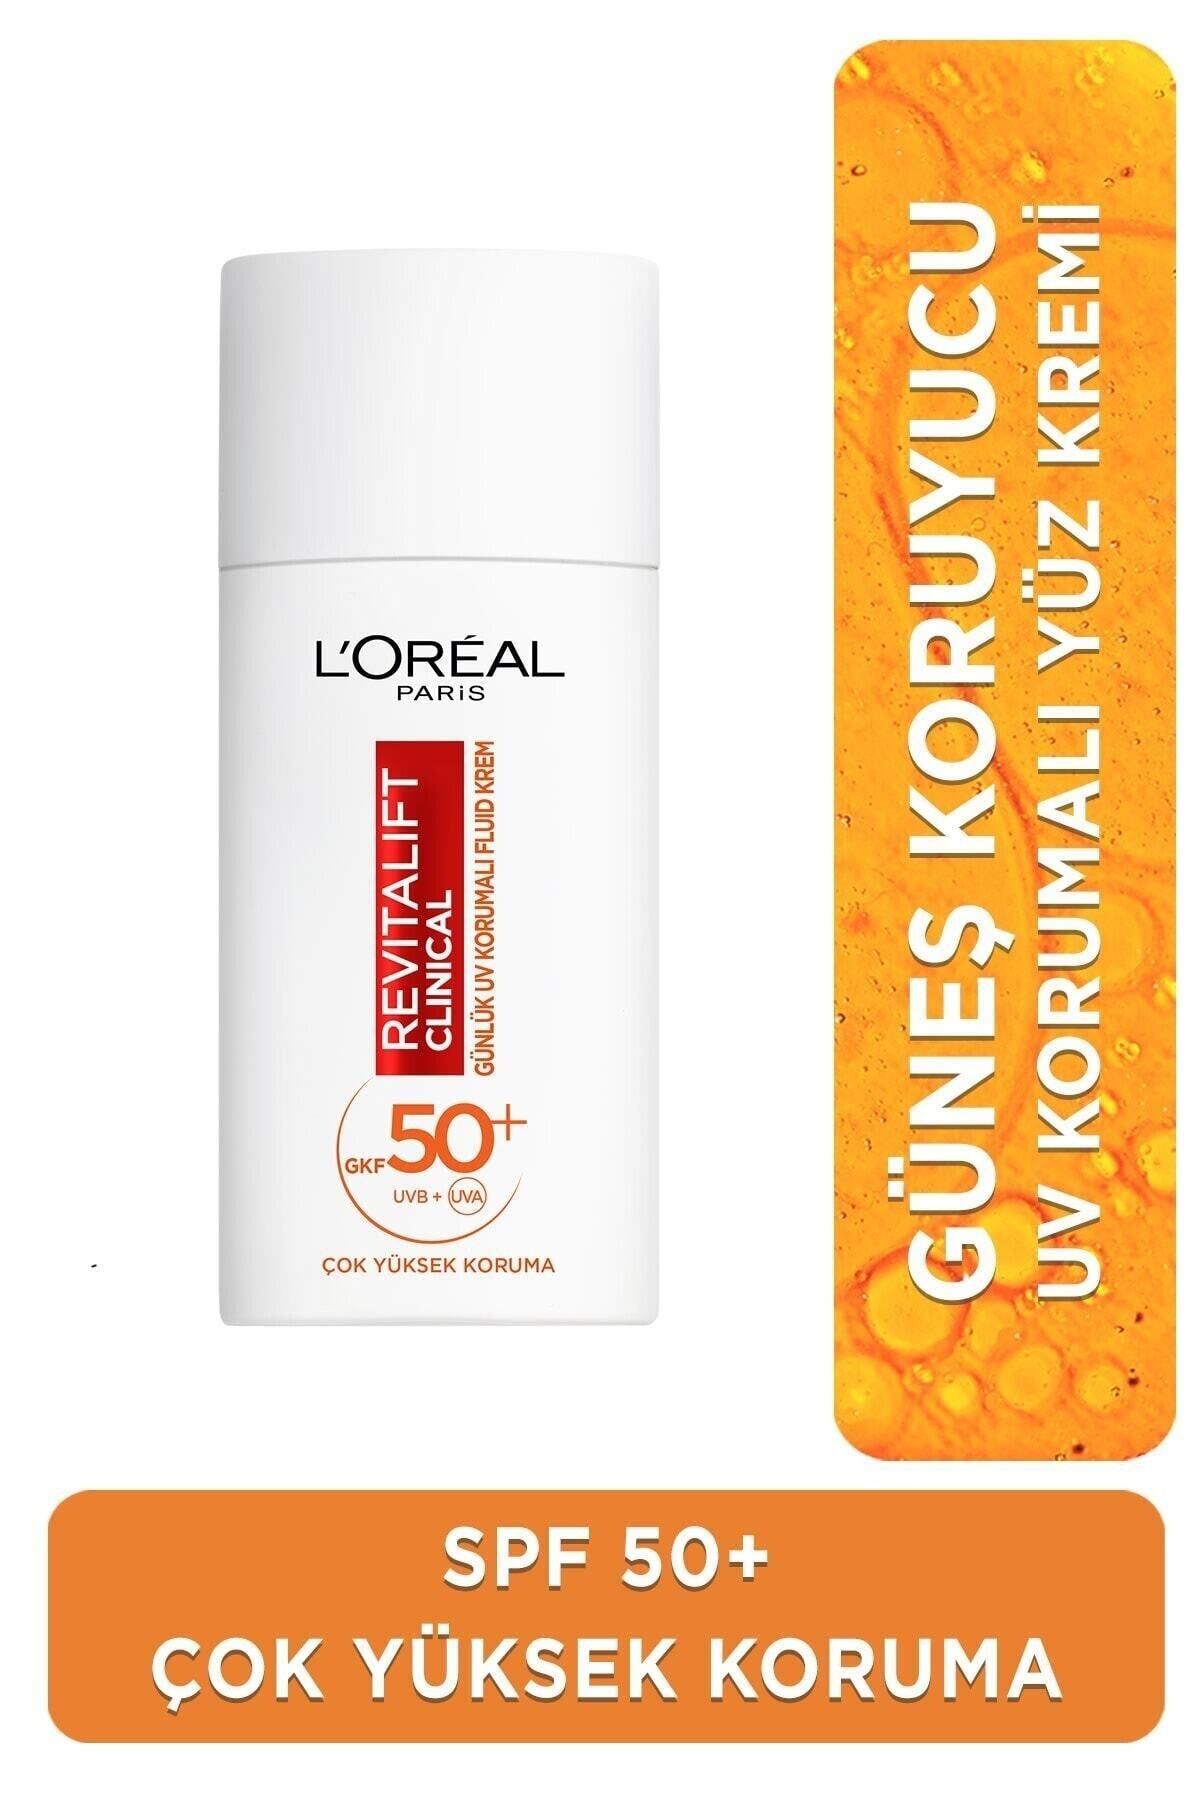 L'Oreal Paris Revitalift Clinical SPF 50+ Facial Sunscreen 50 /ml Daily High UV Protection GKÜrün695